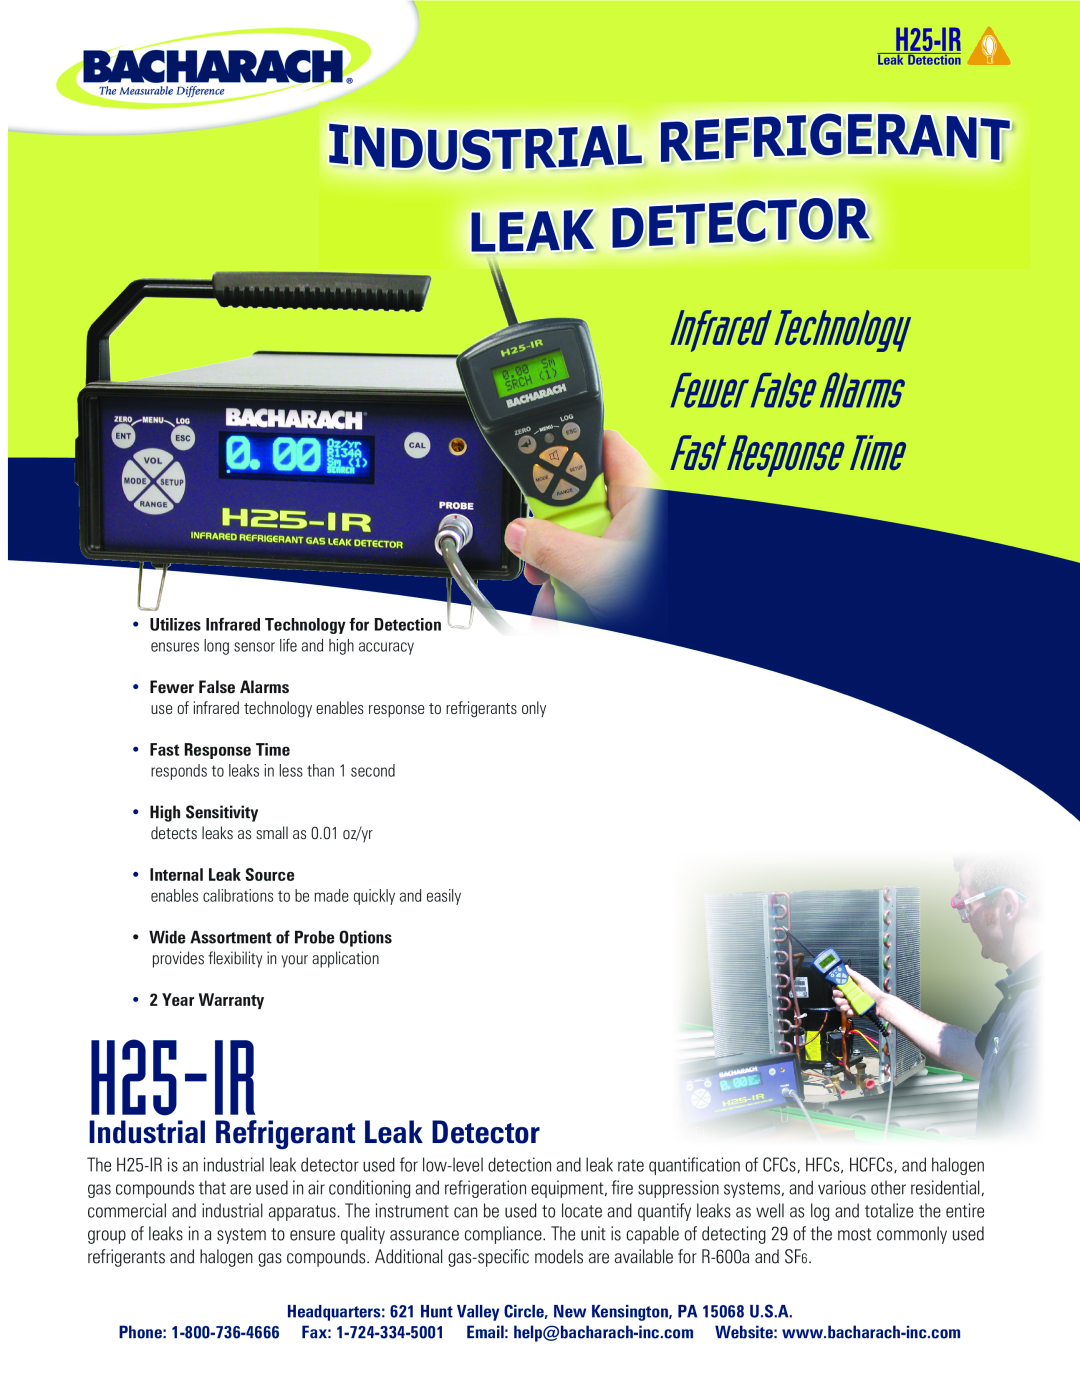 Bacharach R-600a warranty Fewer False Alarms, Fast Response Time, High Sensitivity, Internal Leak Source, Year Warranty 